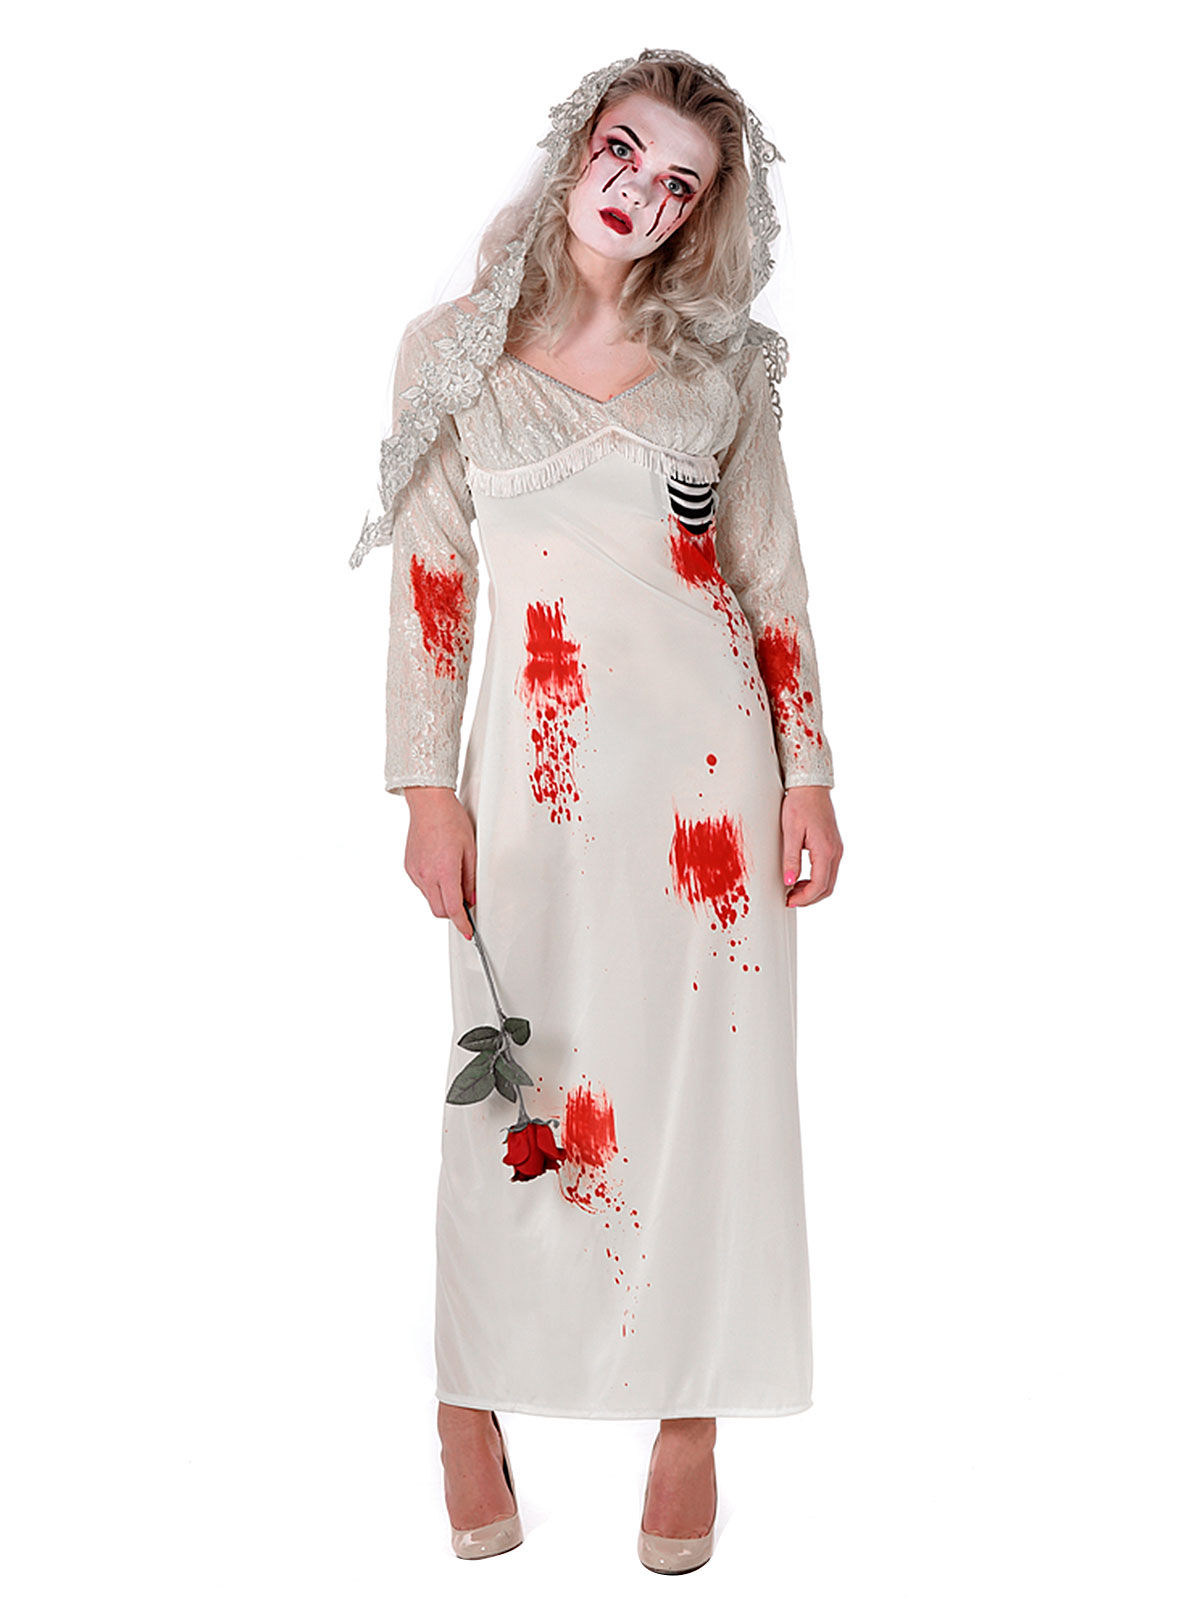 Zombie-Braut Halloween-Damenkostüm Geist weiss-rot-schwarz